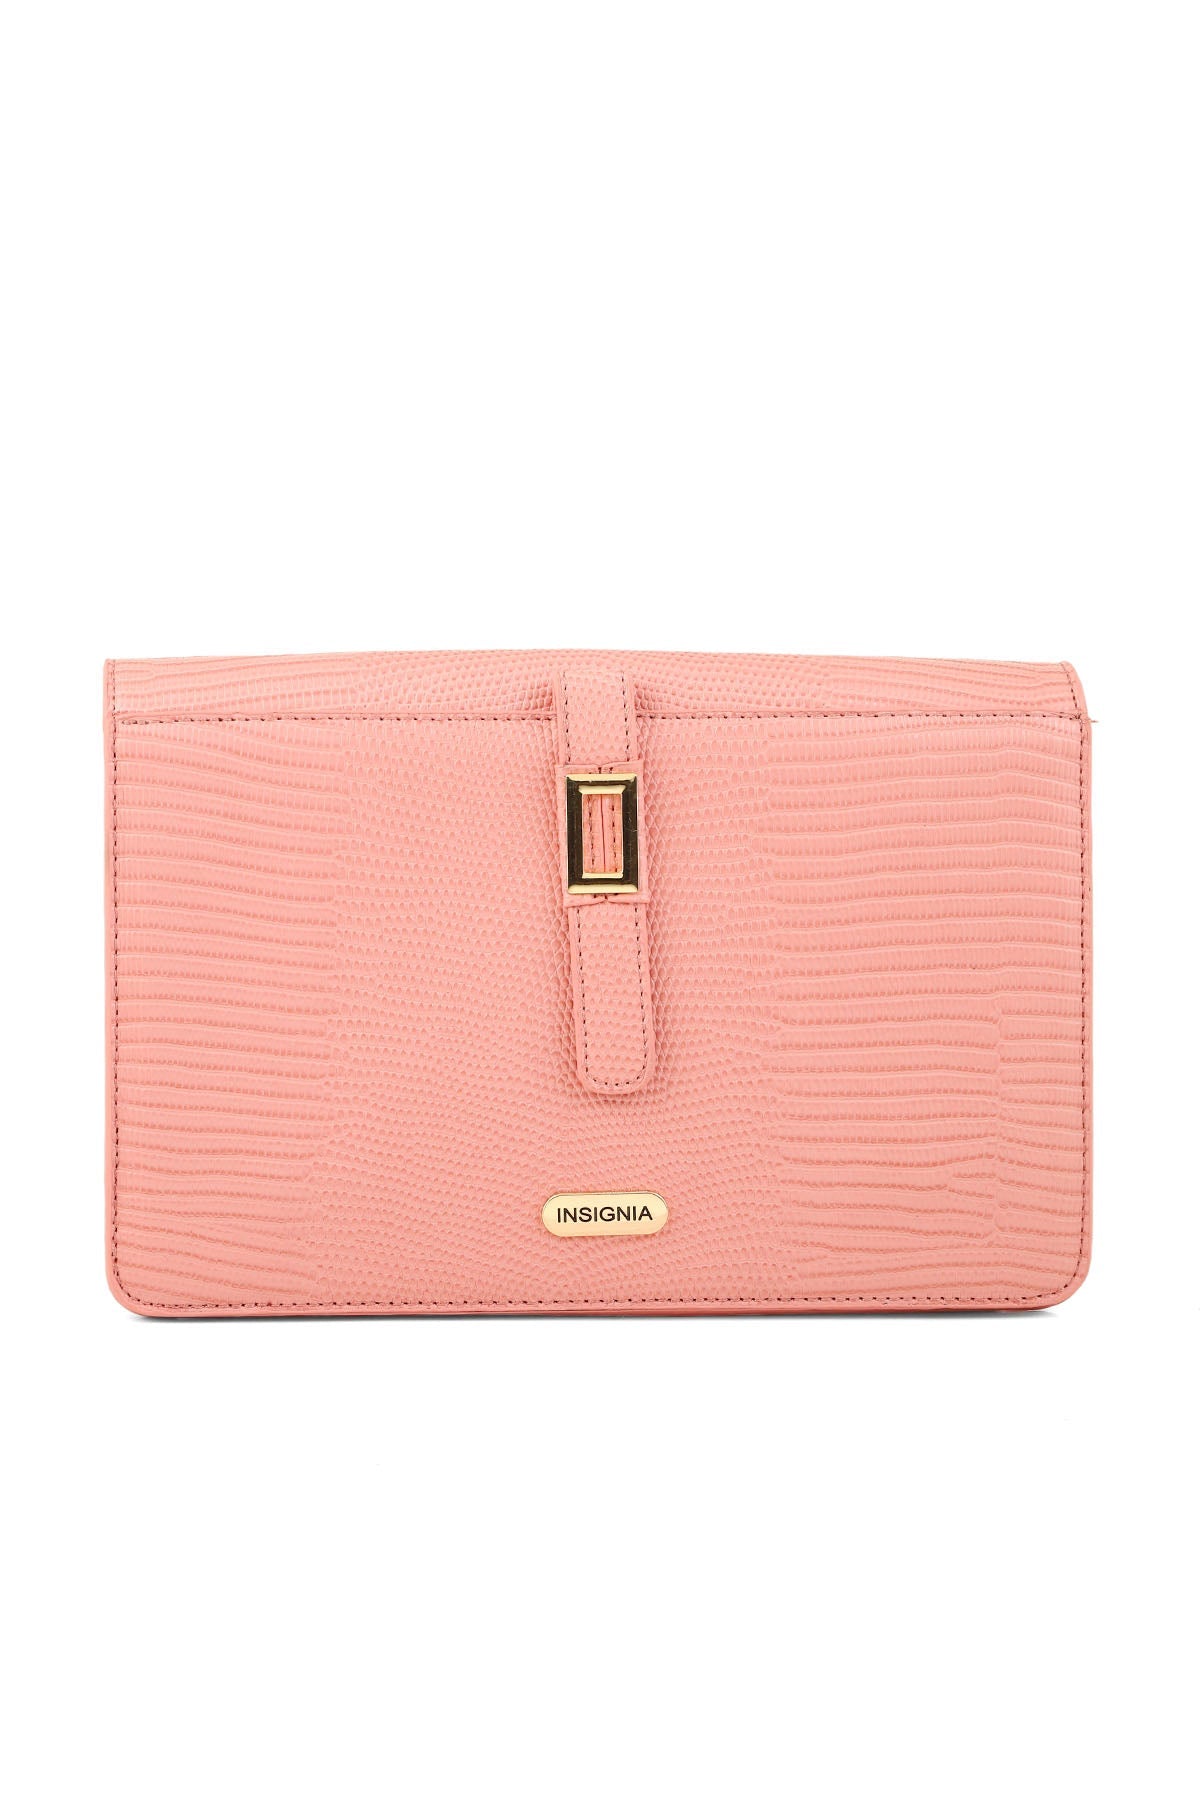 Cross Shoulder Bags B15040-Pink